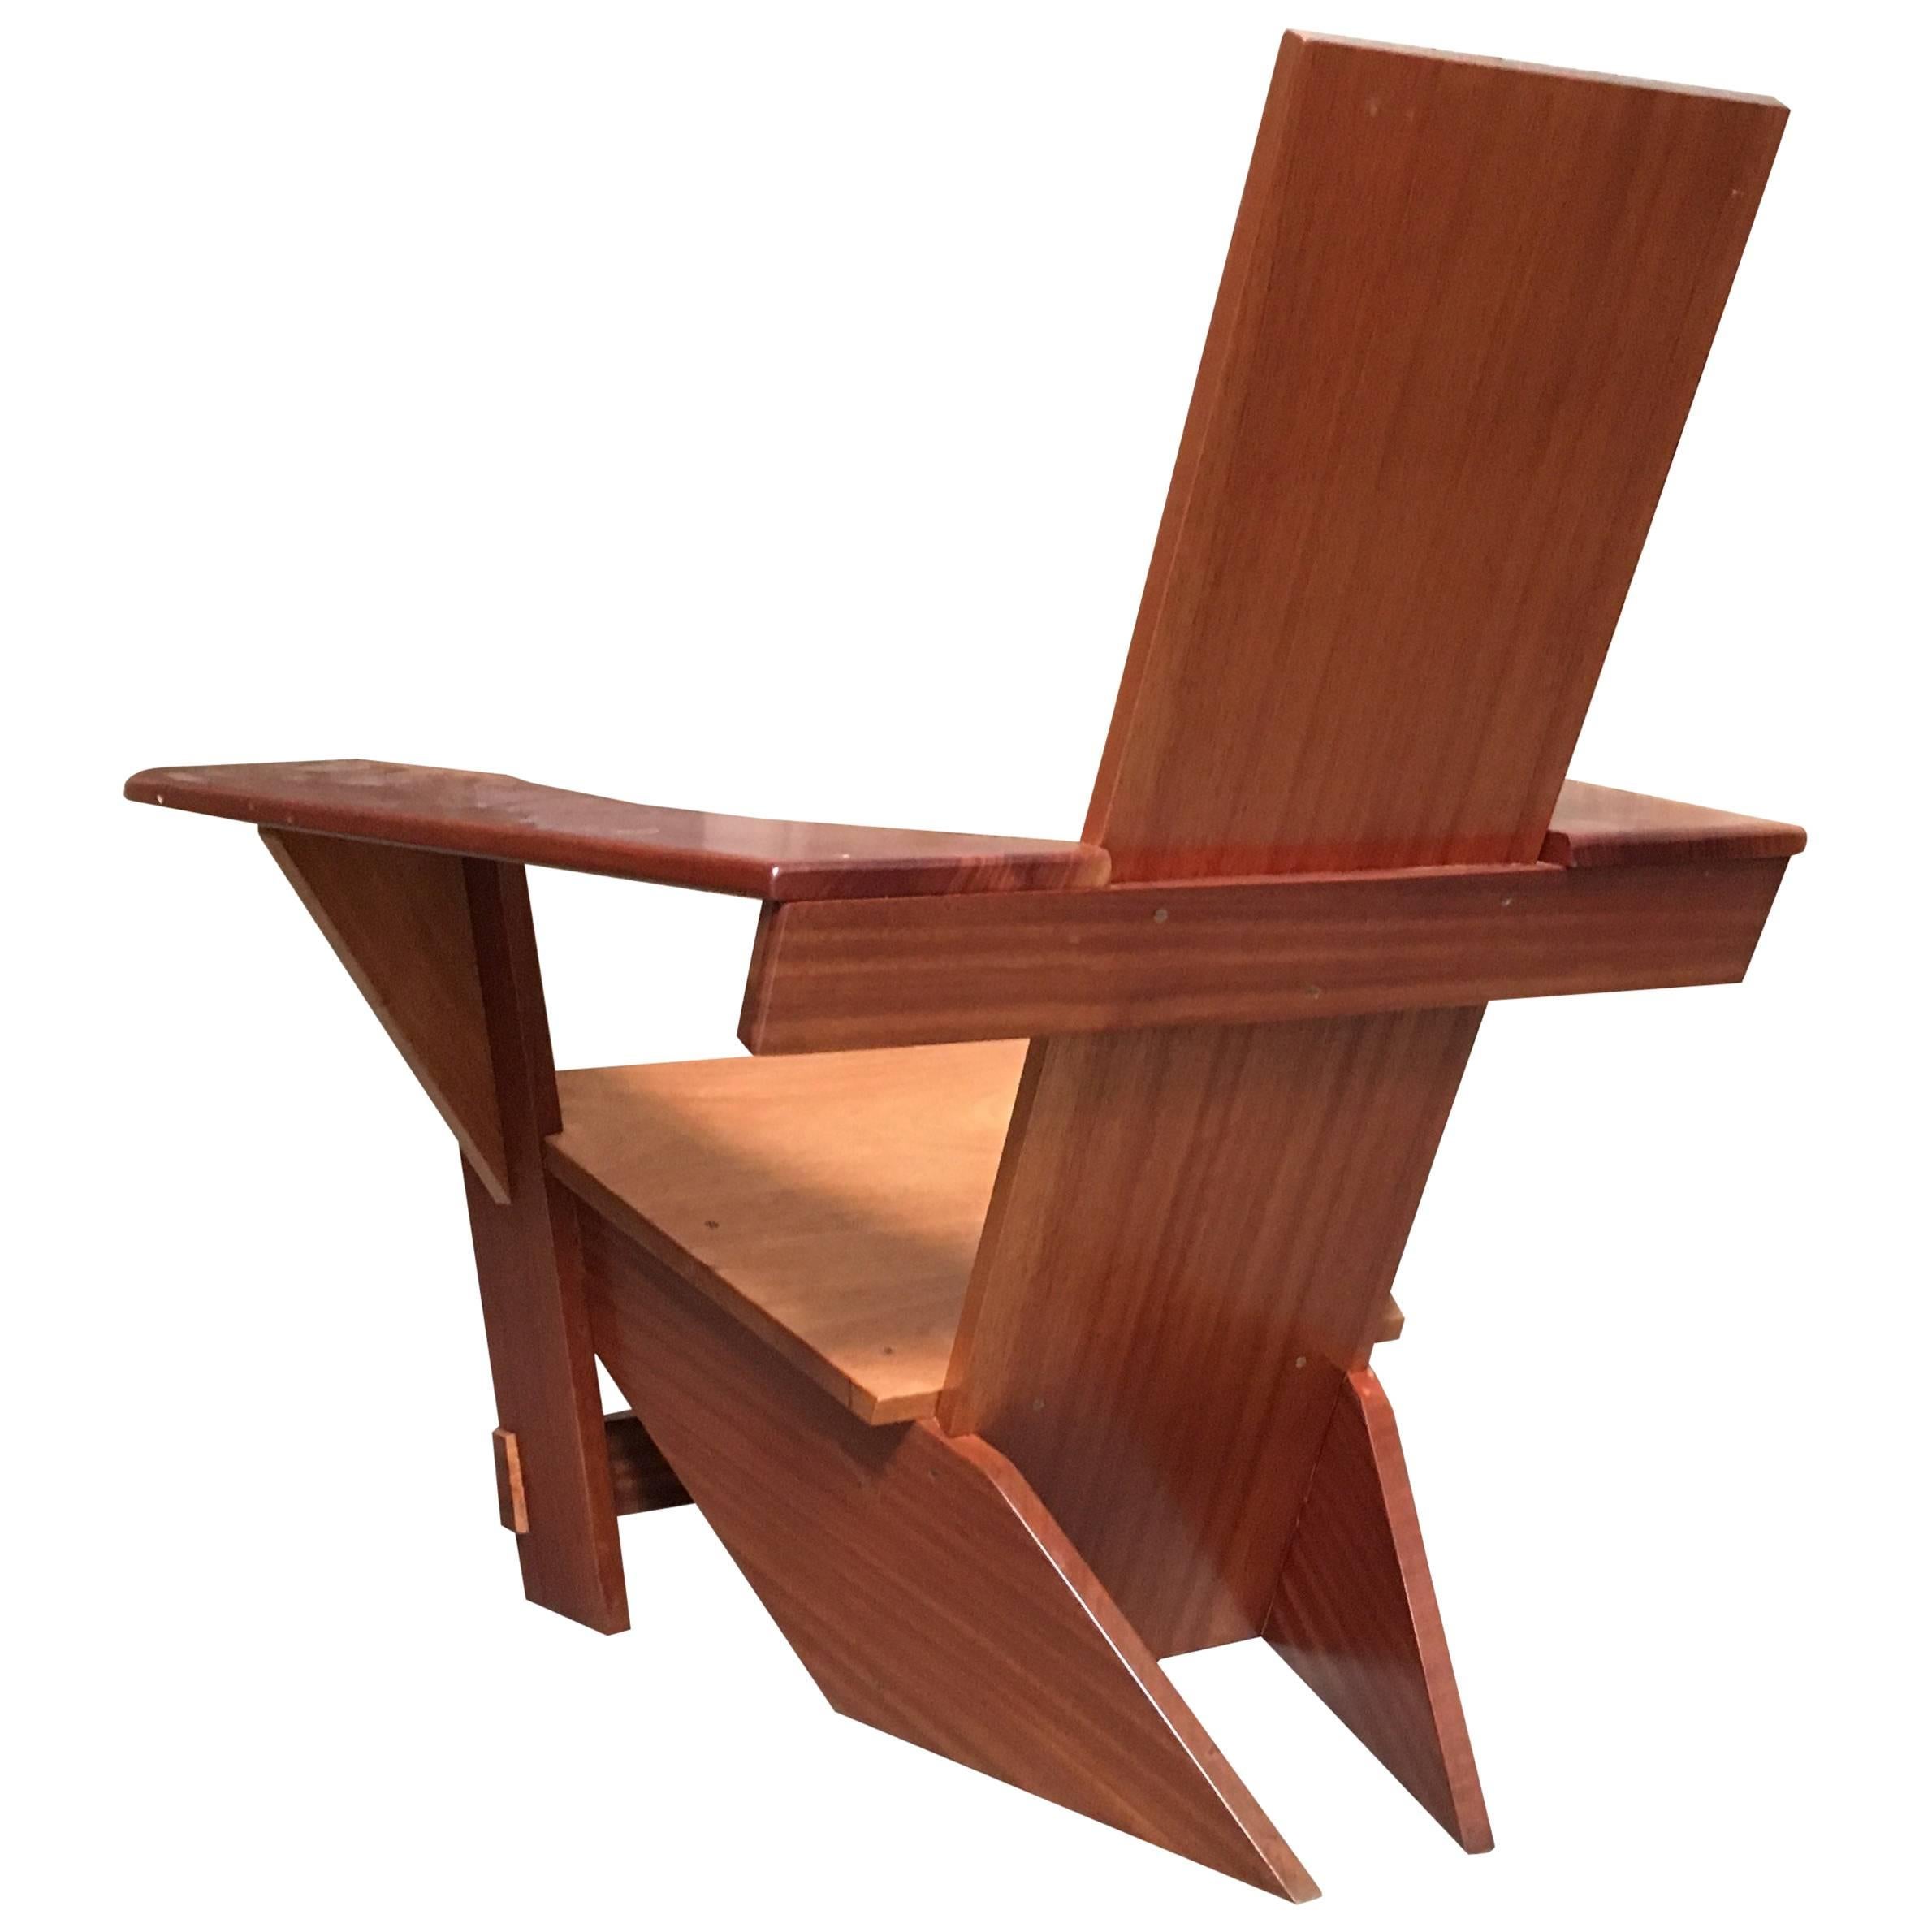 Studio Crafted Mahogany Adirondack Chair